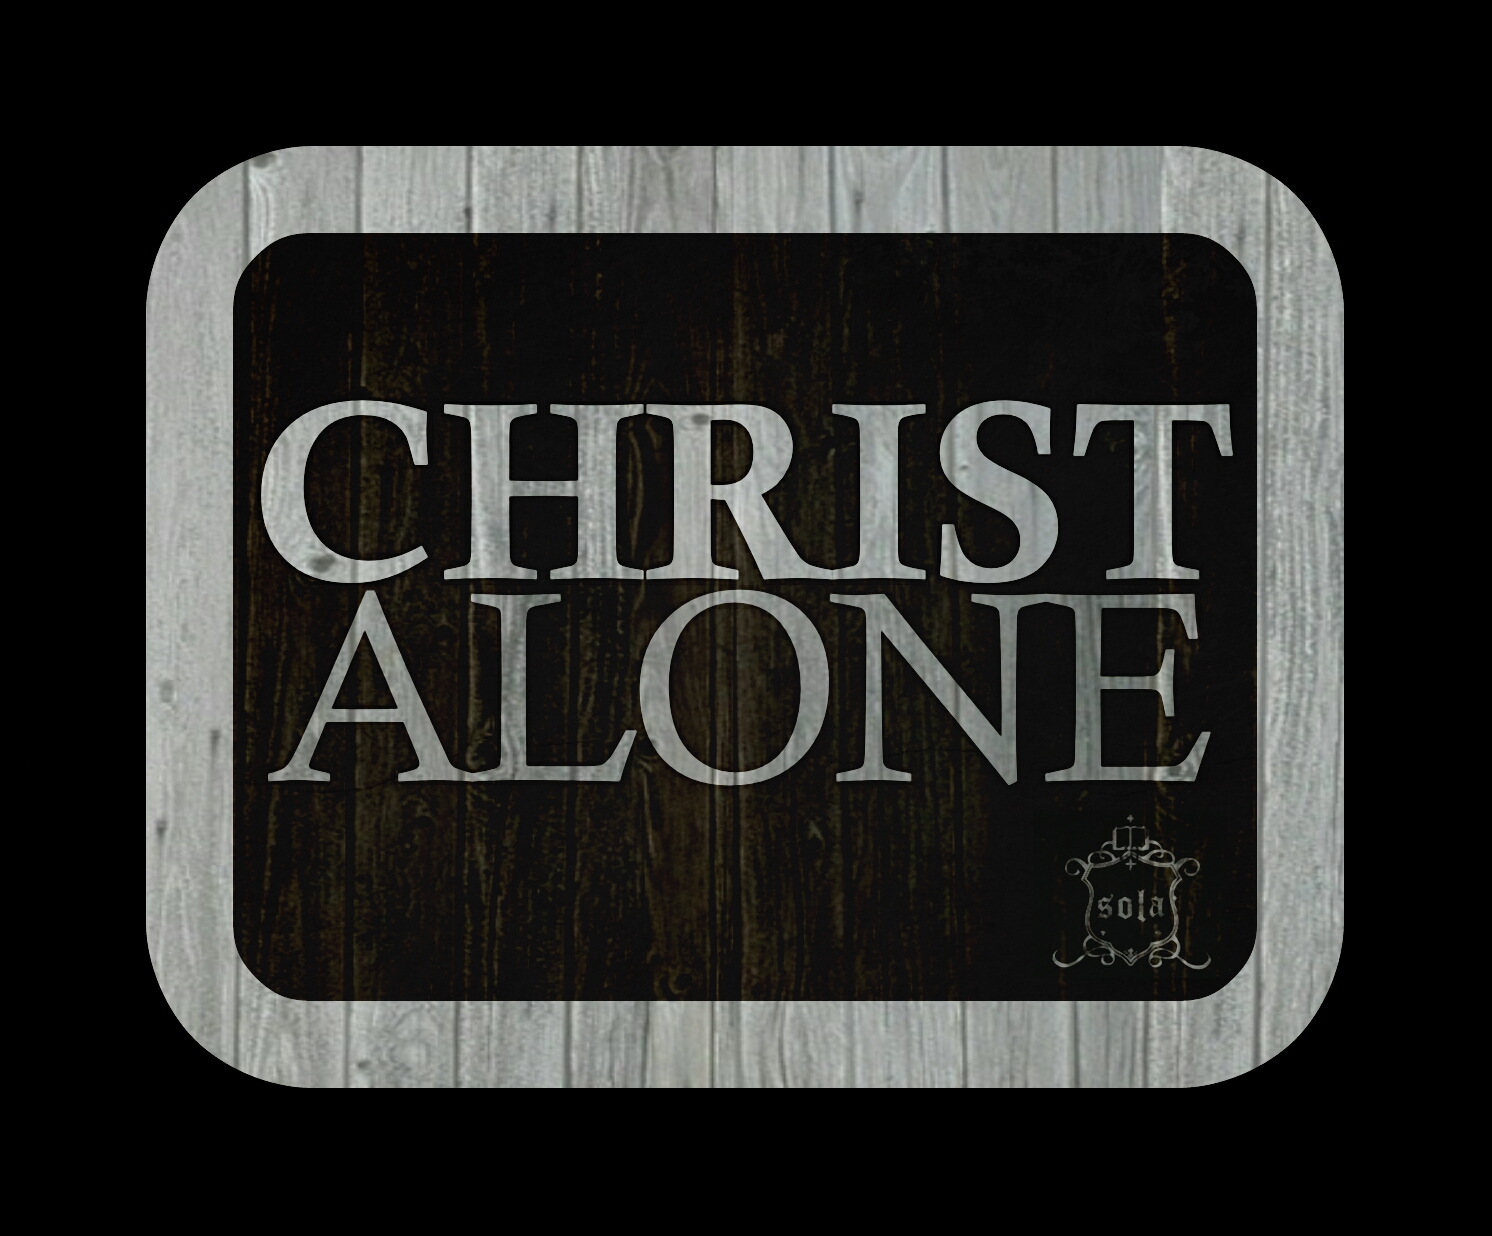 Christ Alone